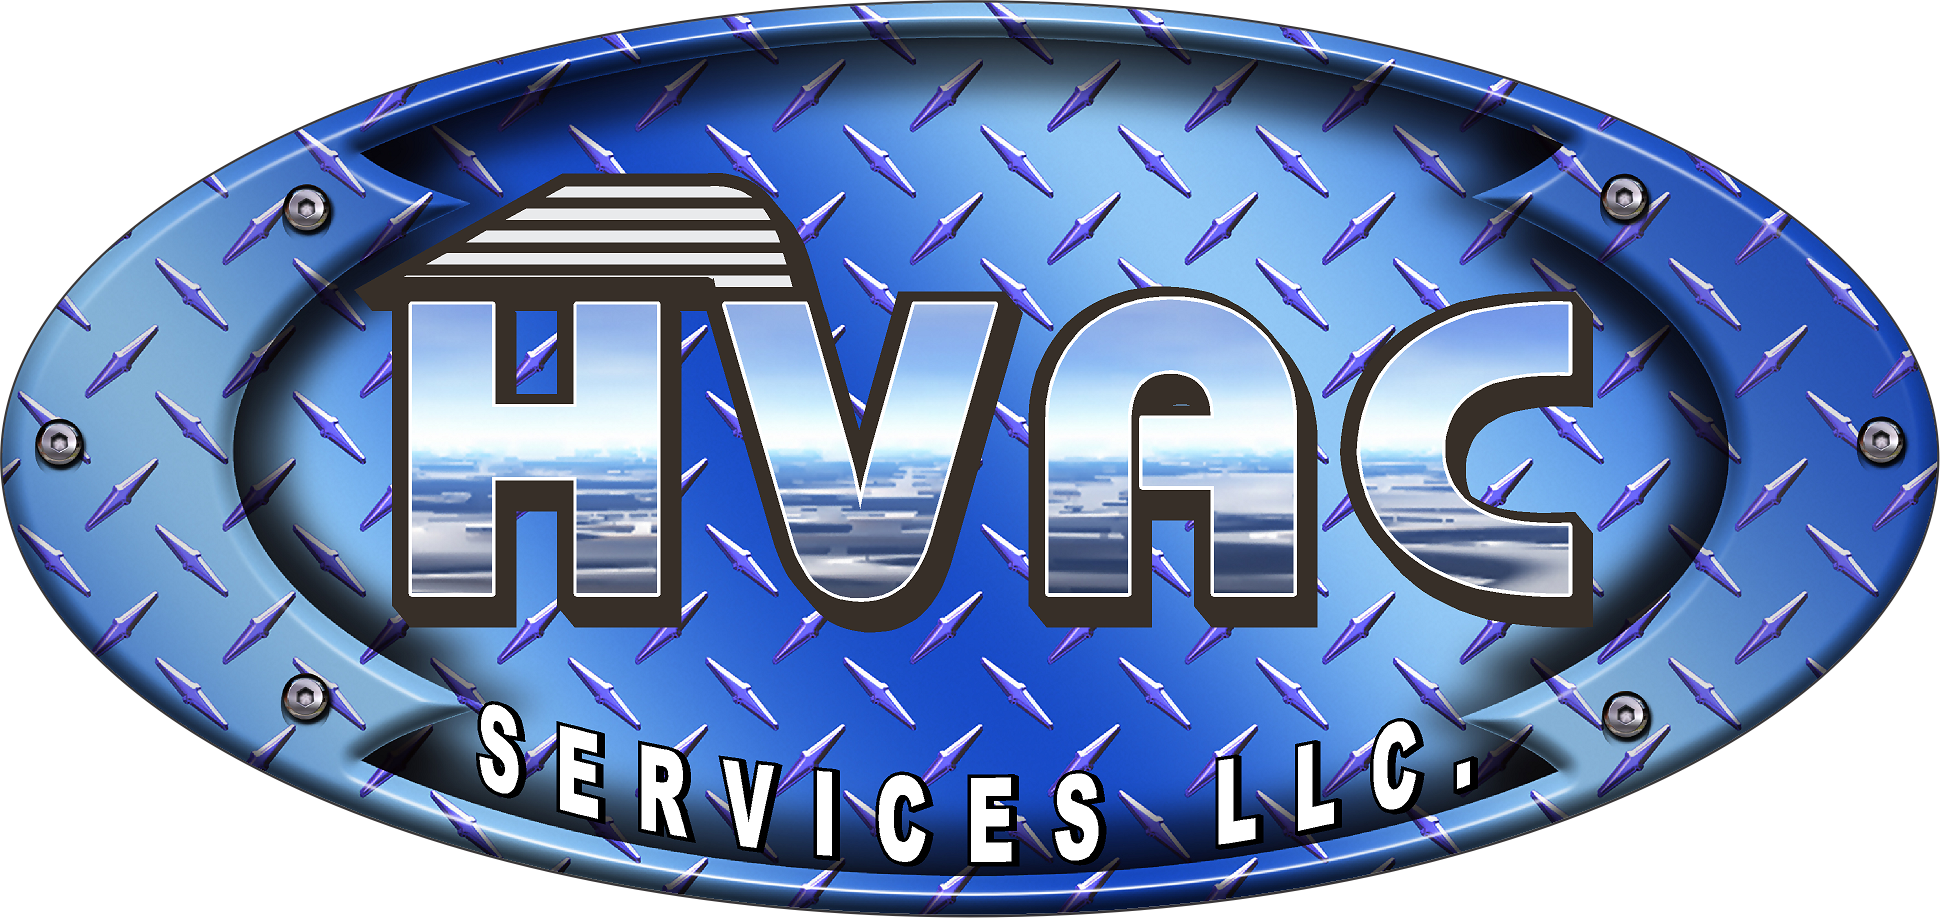 HVAC Services, LLC